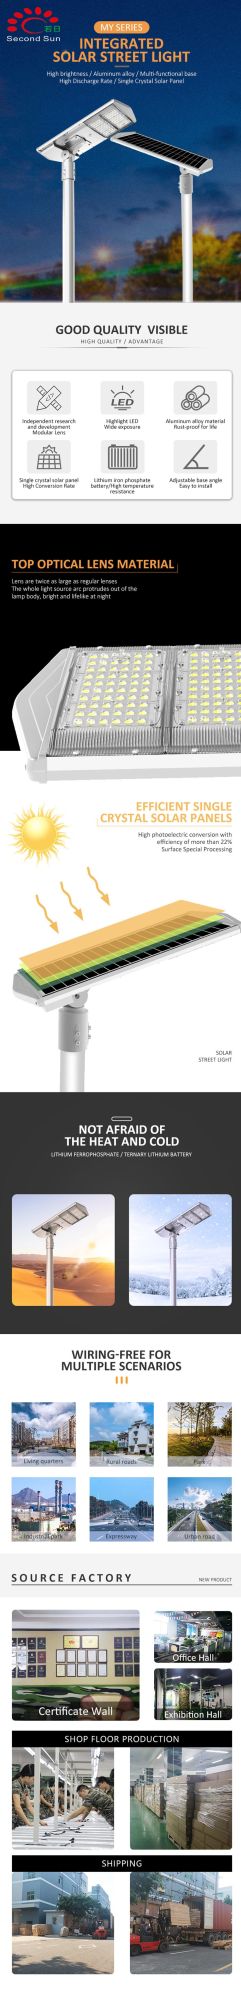 Solar Light Outdoor China Manufacturer Outdoor Lighting Highway Solar LED Light